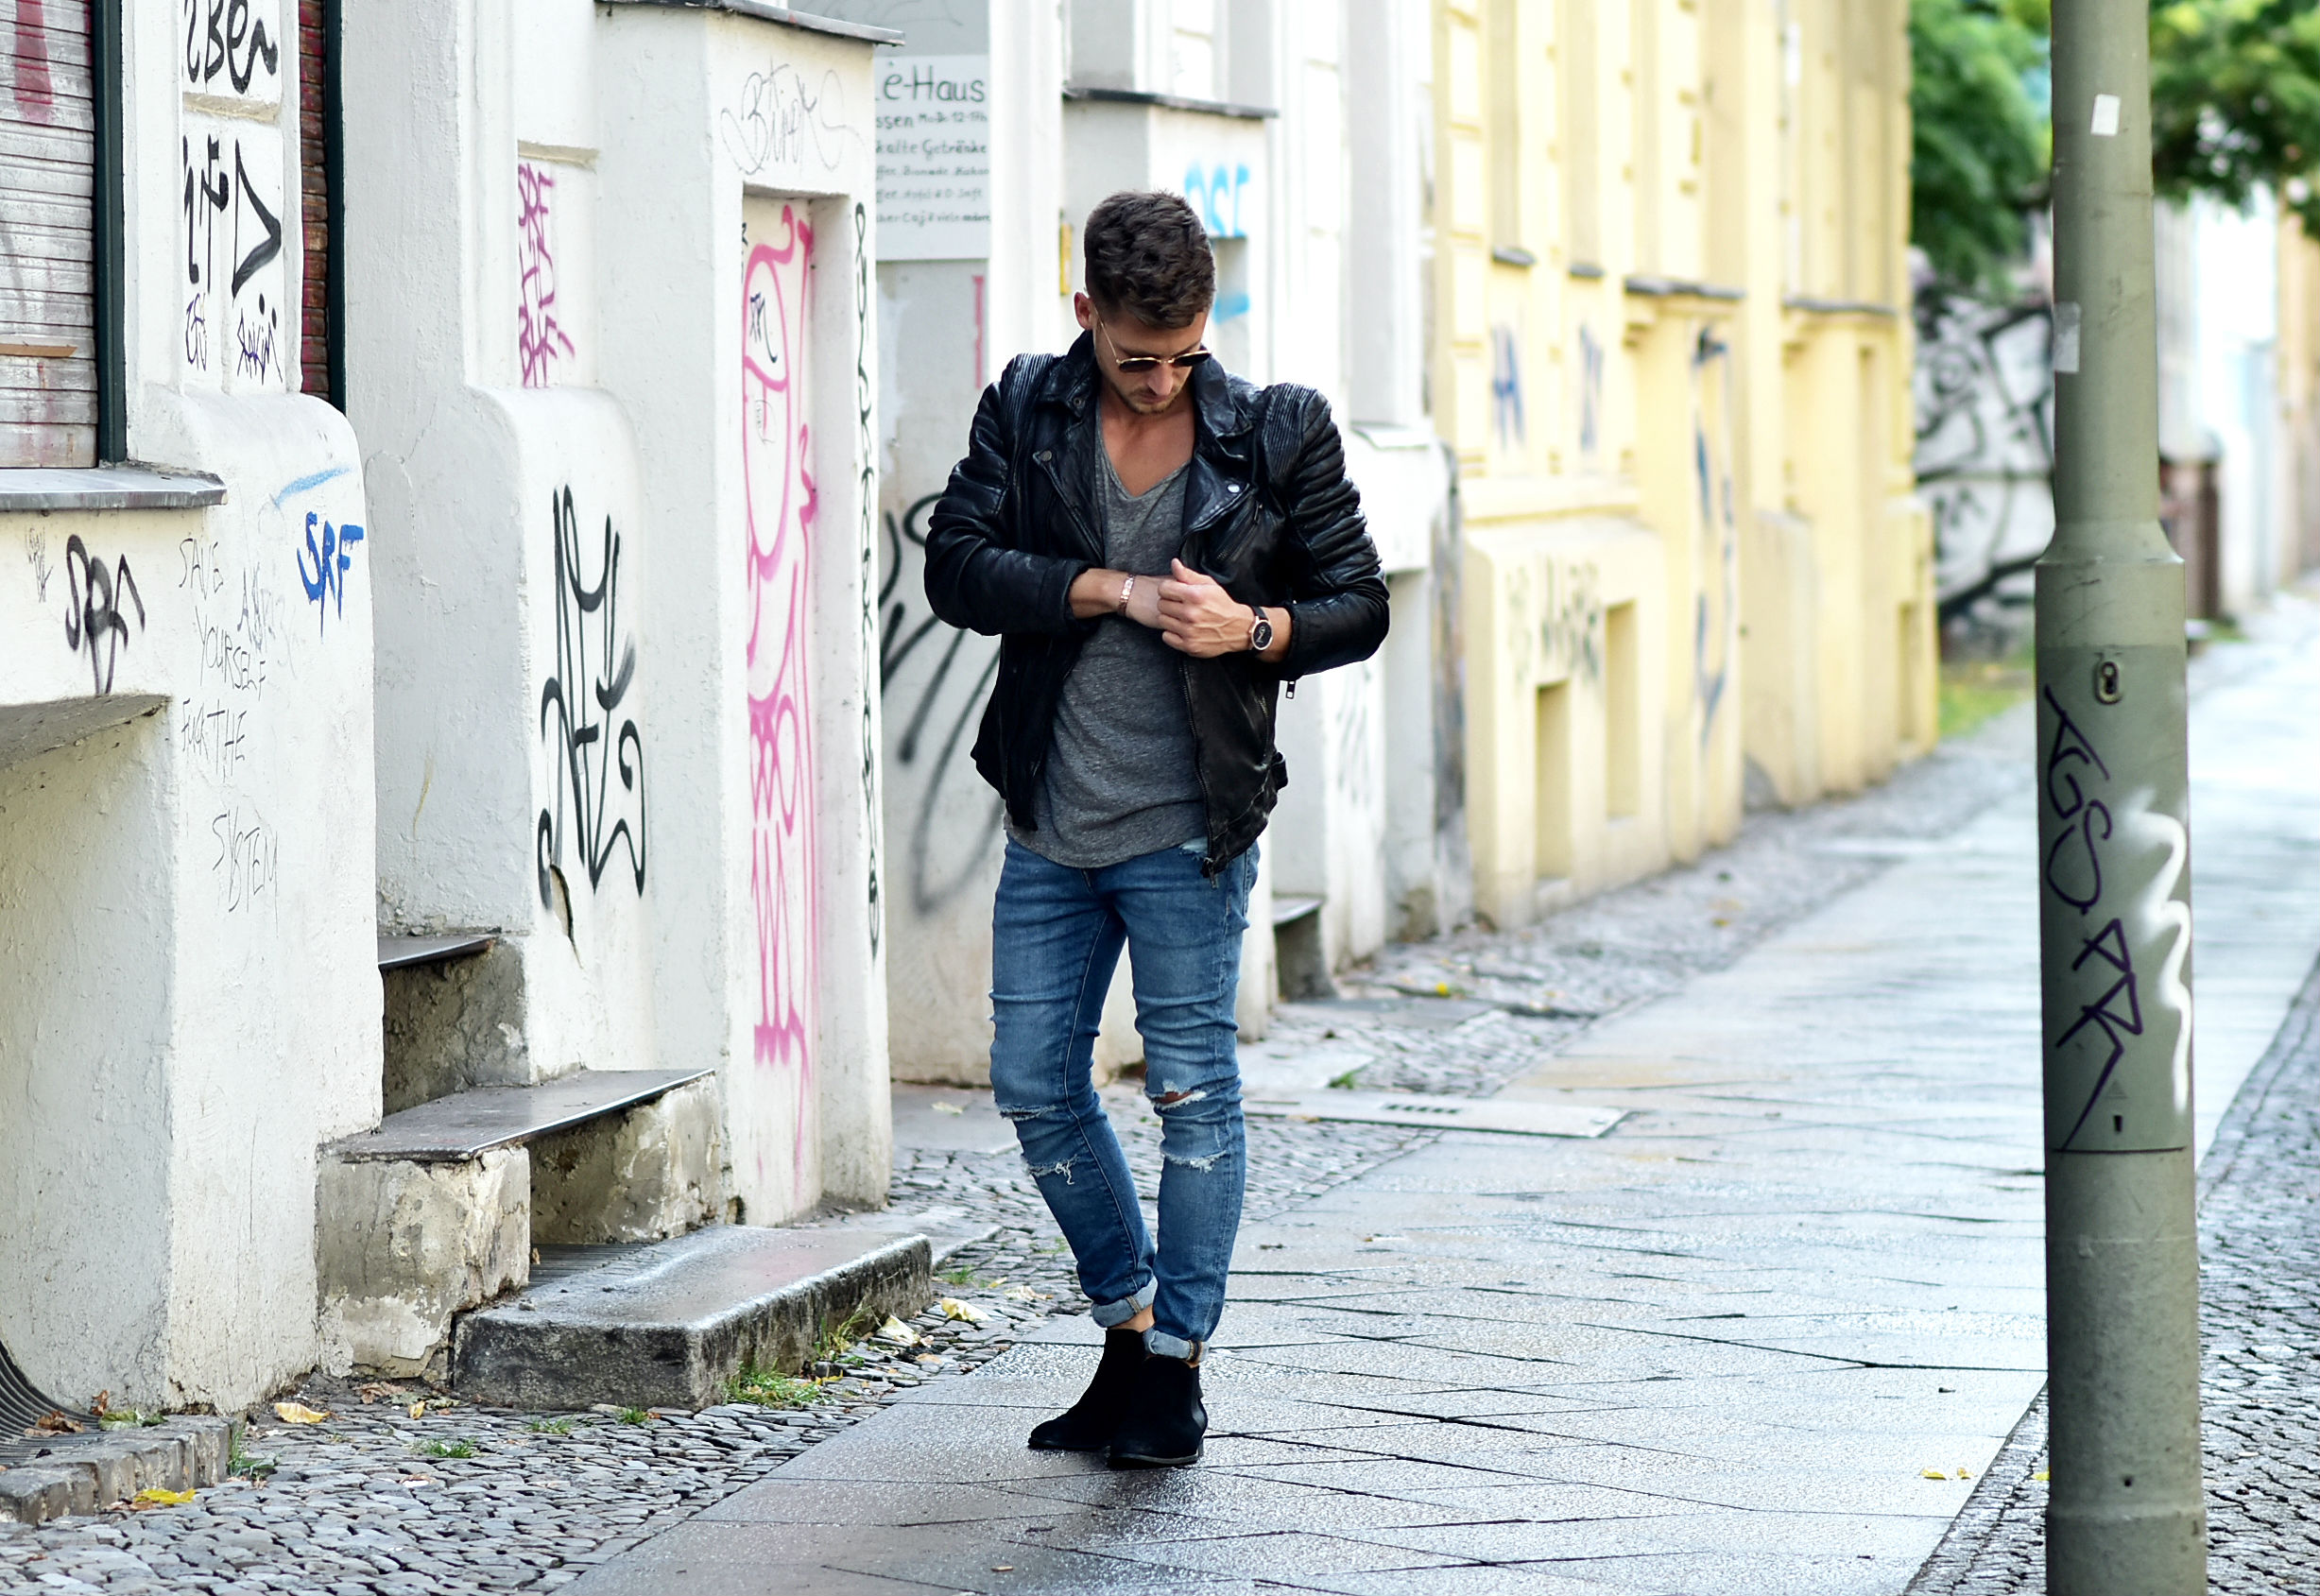 Tommeezjerry-Styleblog-Männerblog-Männer-Modeblog-Berlin-Berlinblog-Männermodeblog-Outfit-Pre-Fall-Look-Bikerlederjacke-Be-Edgy-Chelseaboots-Ripped-Jeans-Herbstlook